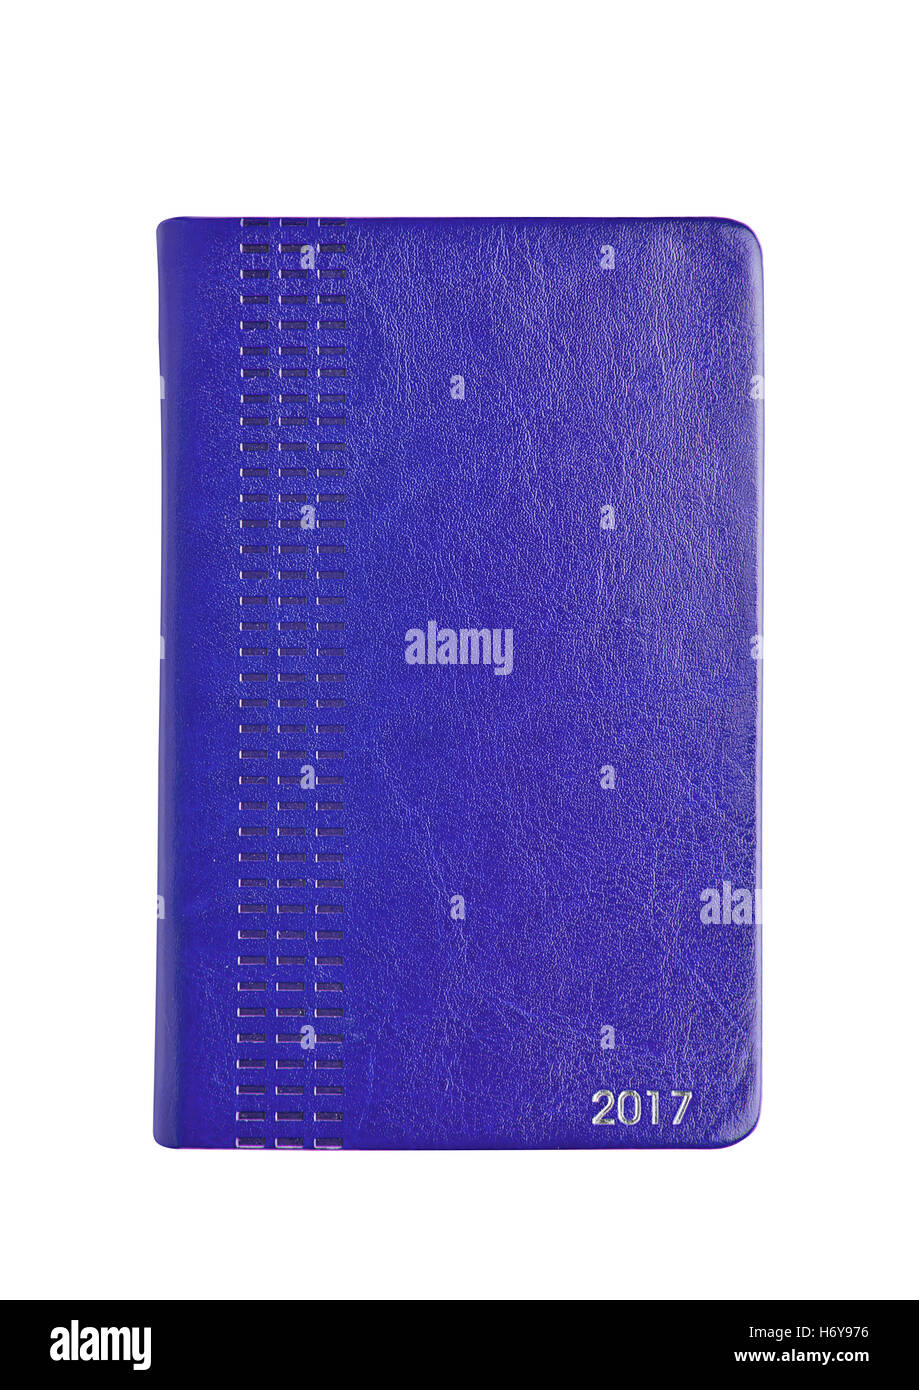 Pelle Blu 2017 diario nota libro su sfondo bianco Foto Stock